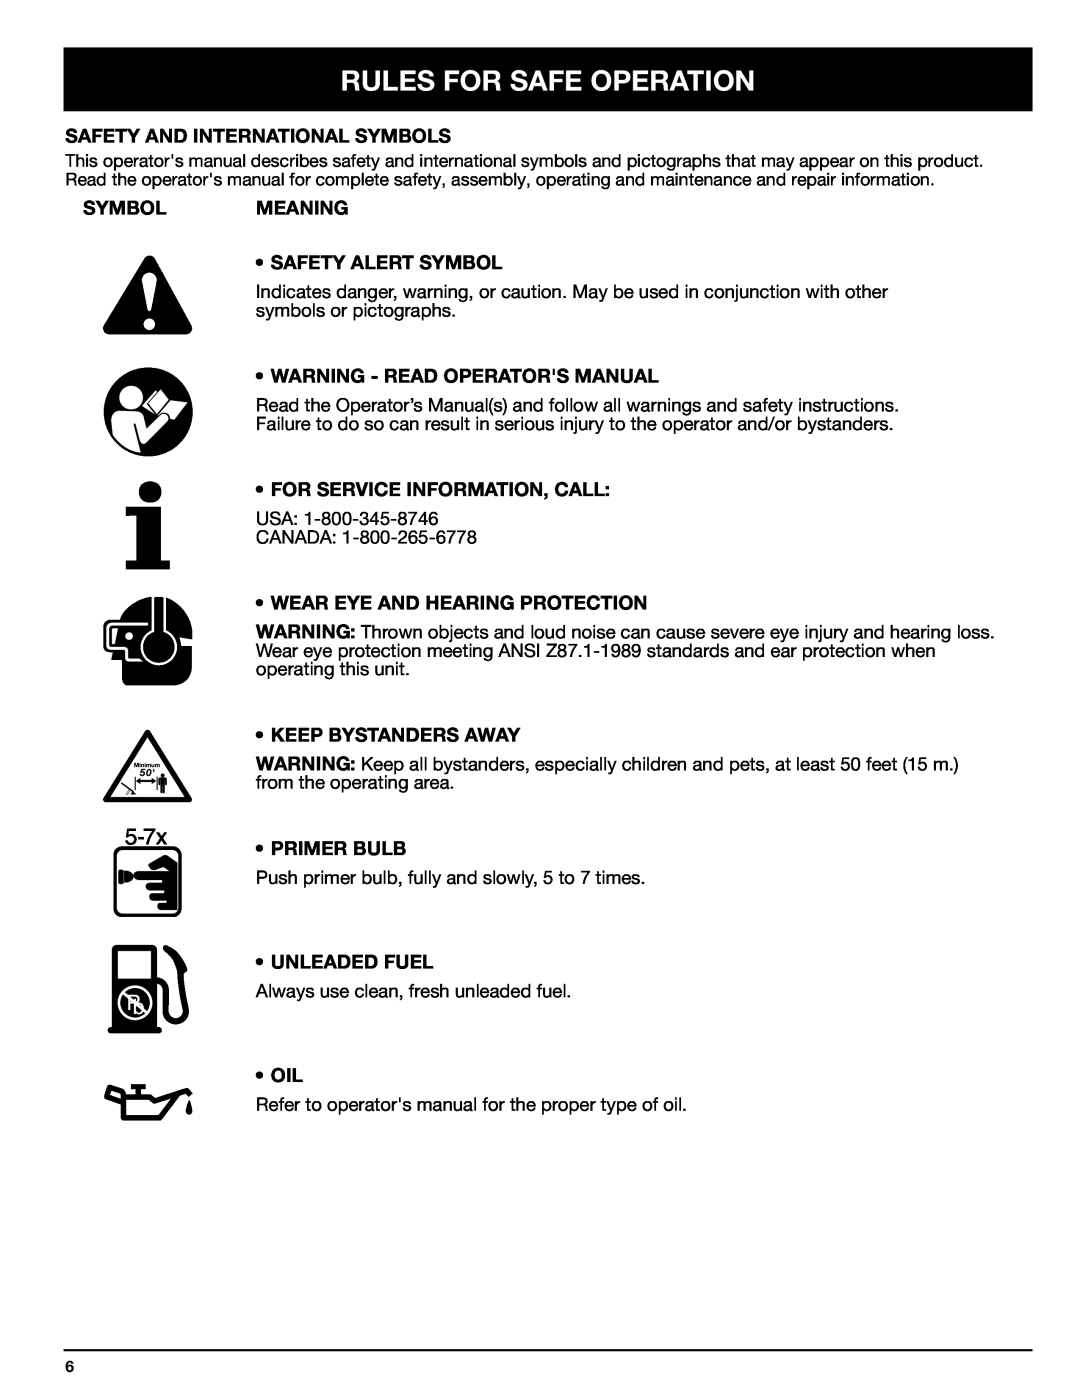 Ryobi Outdoor 875r Safety And International Symbols, Symbolmeaning Safety Alert Symbol, Warning - Read Operators Manual 